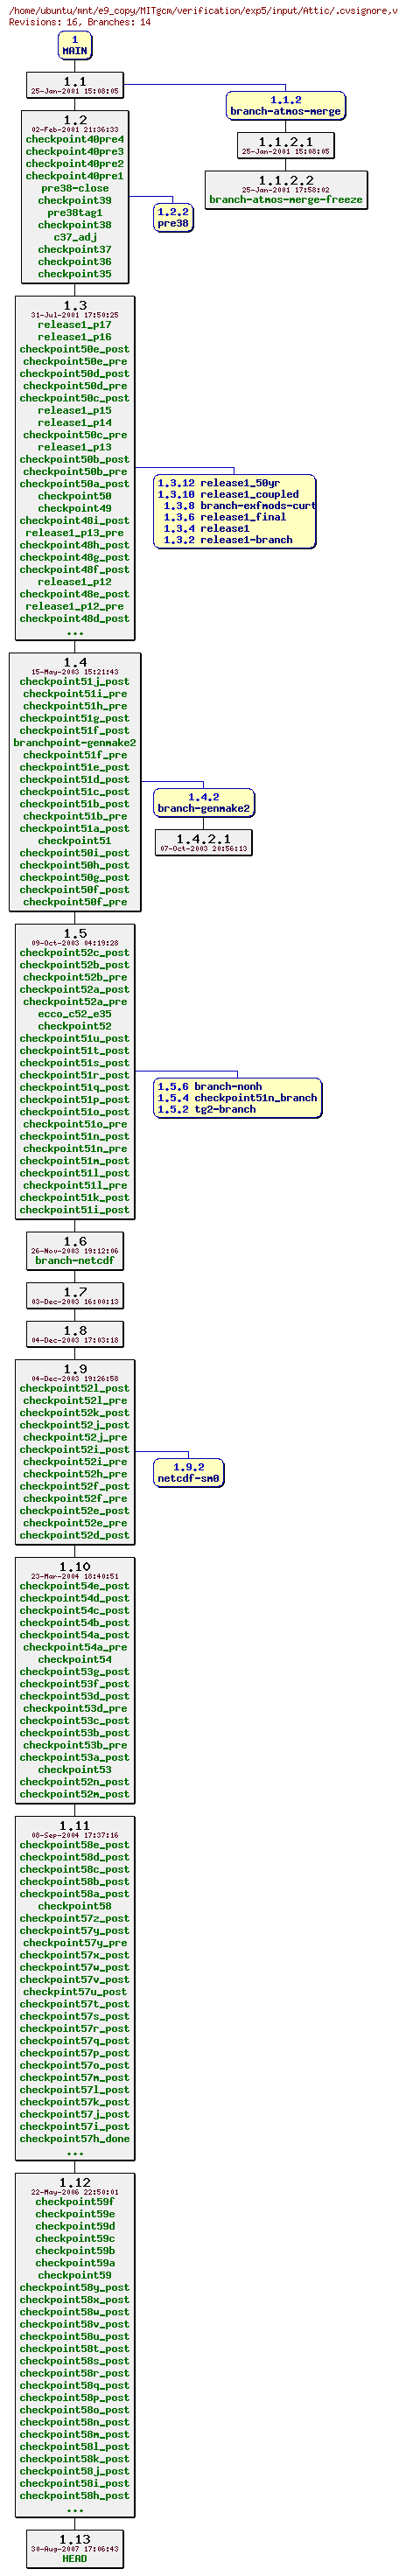 Revisions of MITgcm/verification/exp5/input/.cvsignore